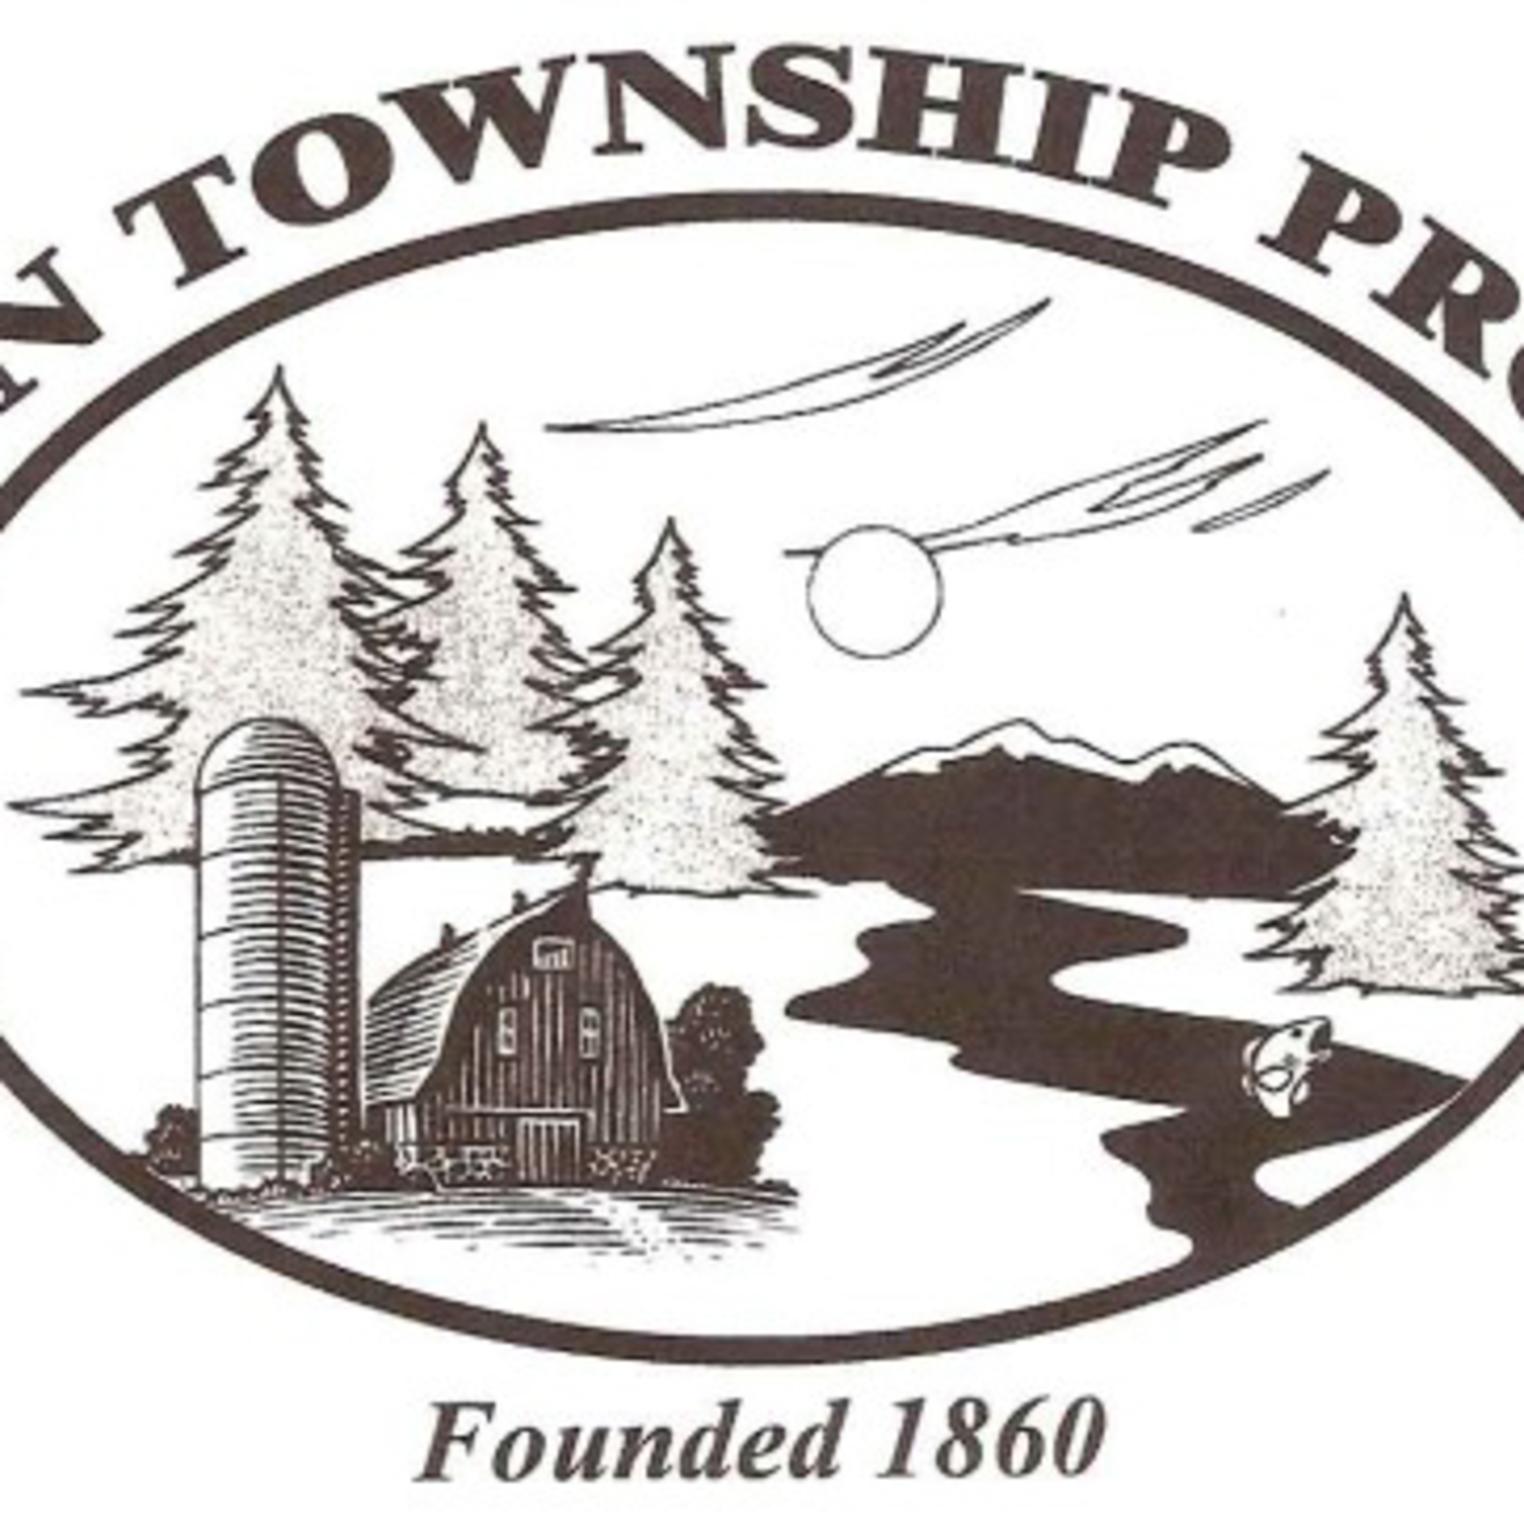 Penn Township